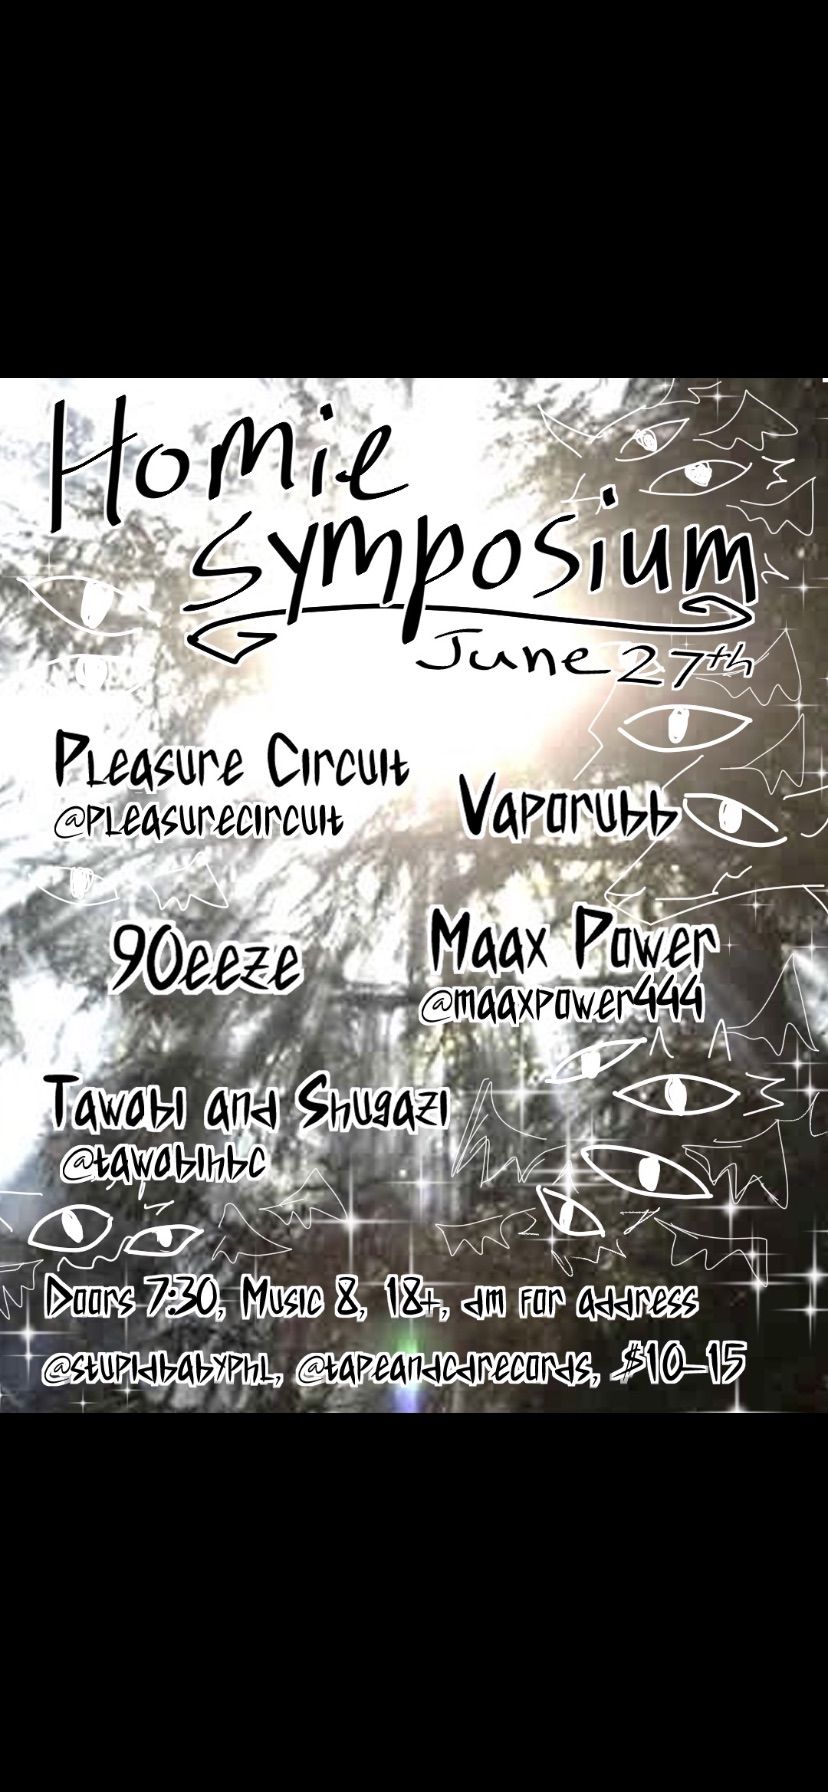 Homie Symposium: Maax Power\/Pleasure Circuit\/Vaporubb\/Tawobi and Shugazi\/90eeze